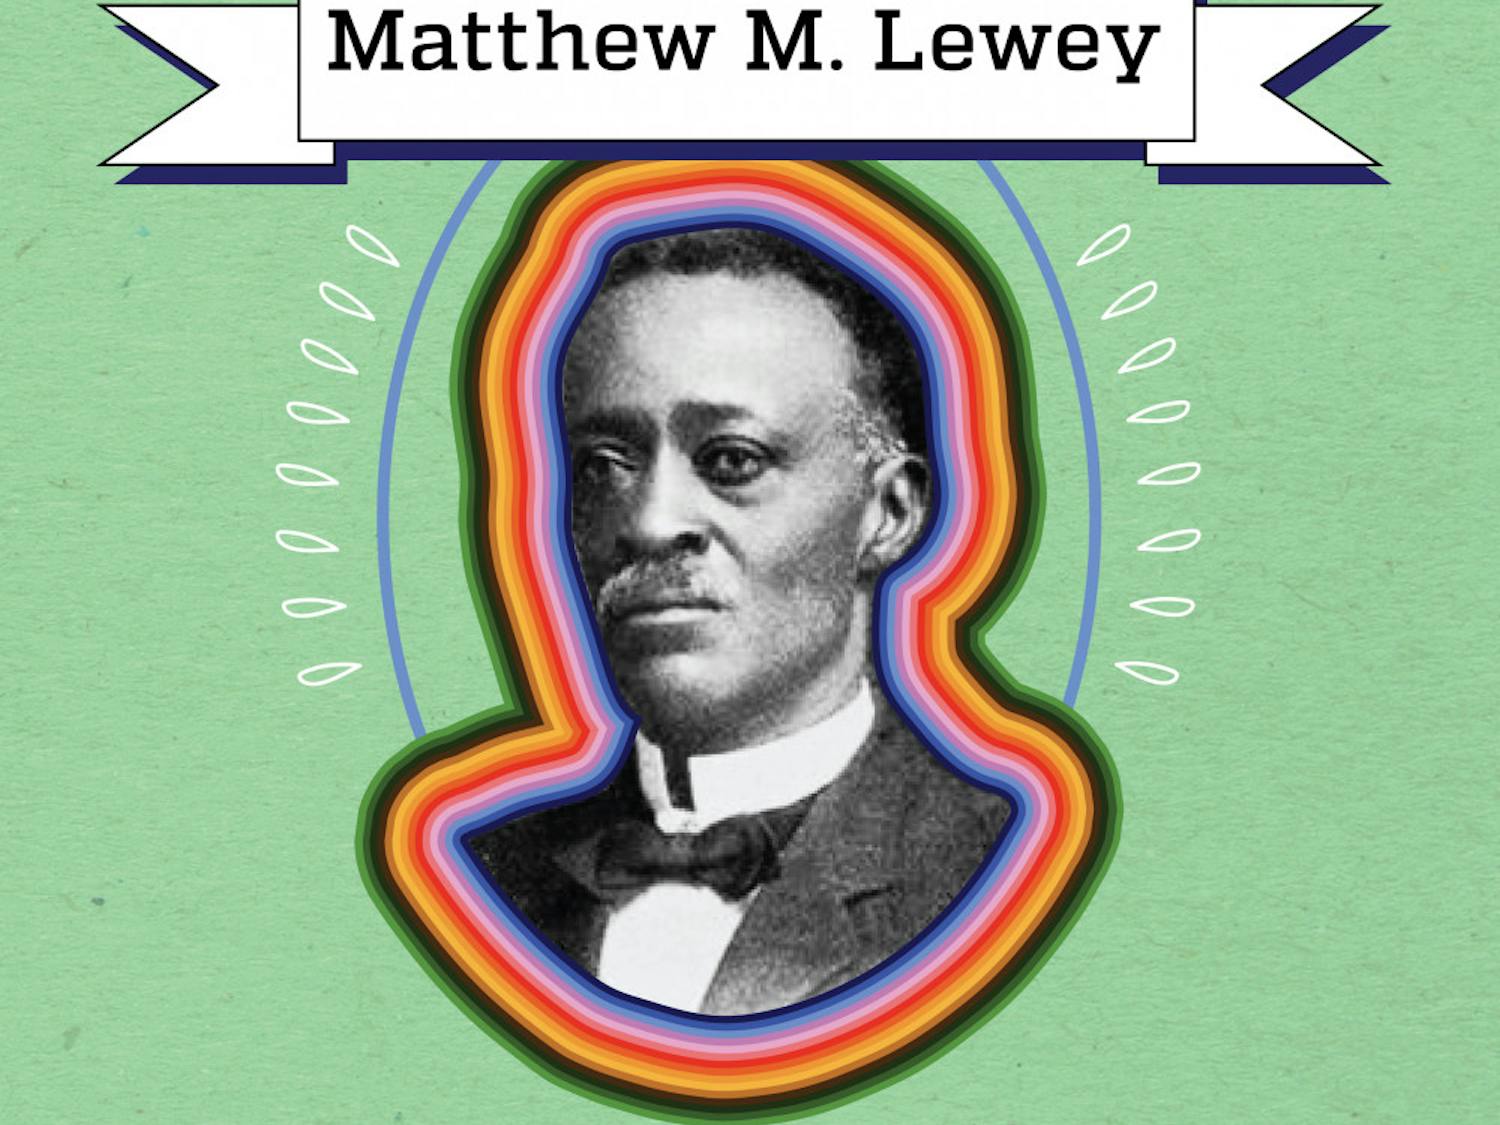 Matthew M. Lewey